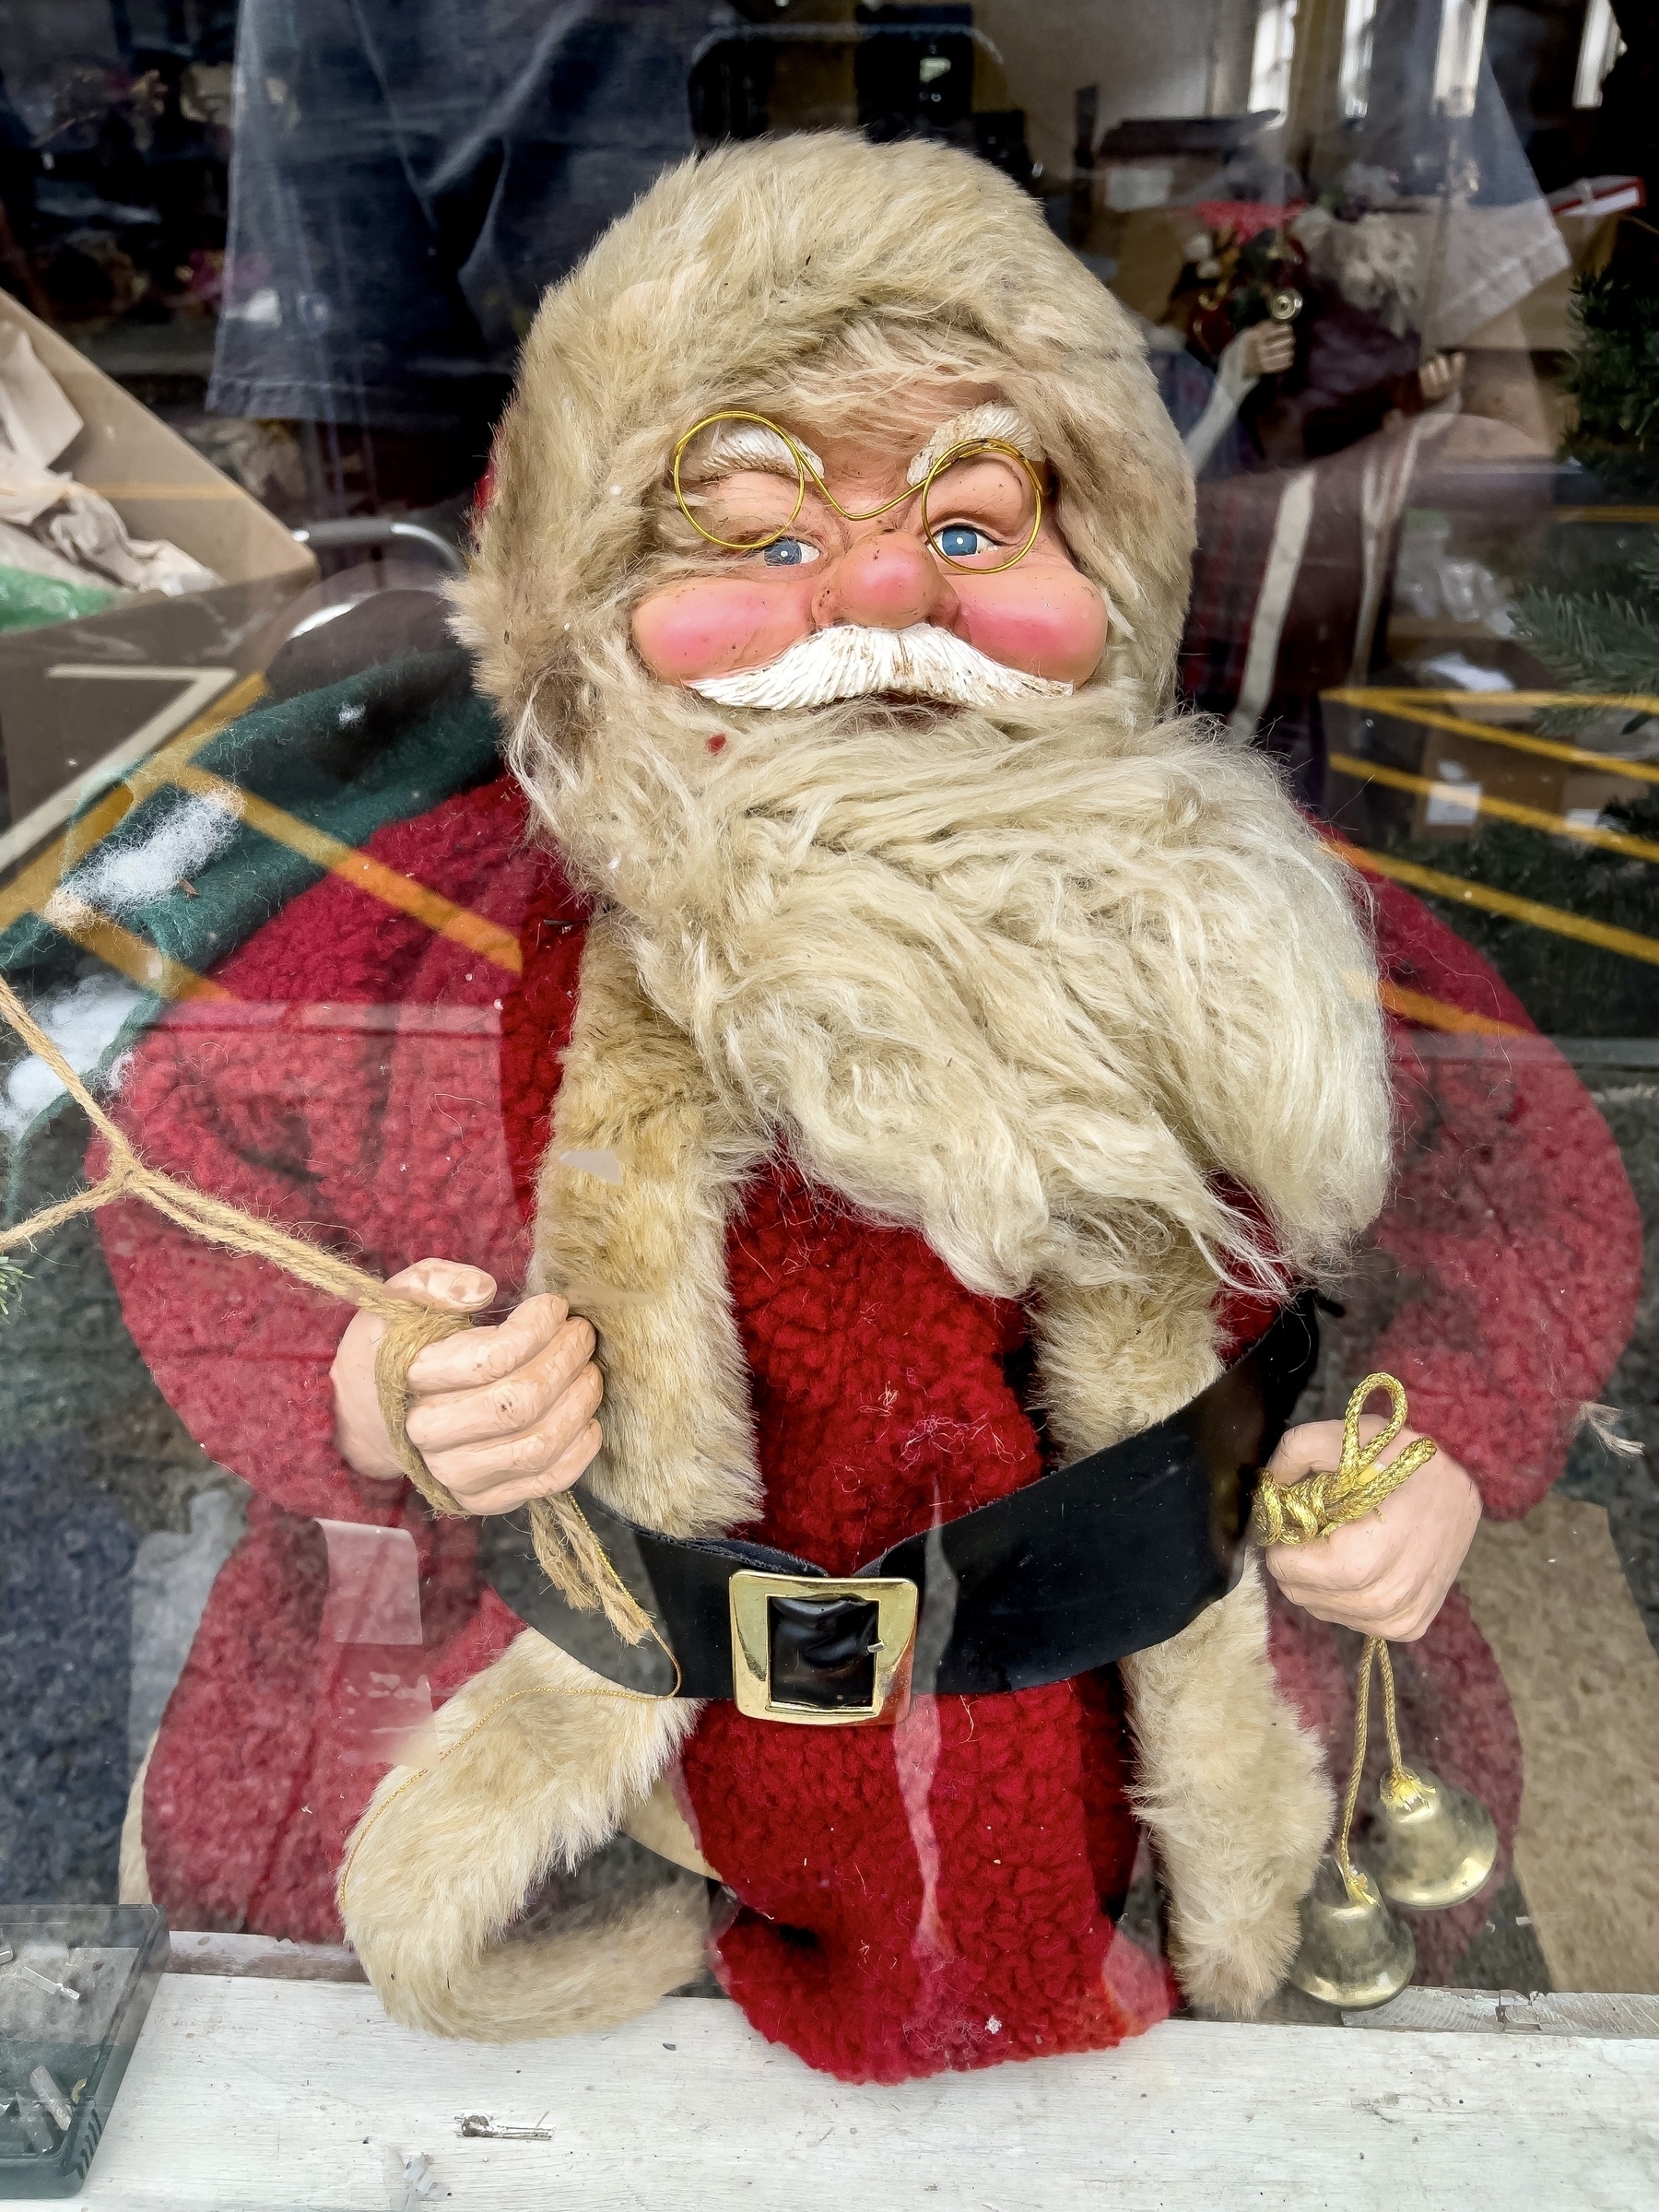 santa clause statue in an estate sales shop window